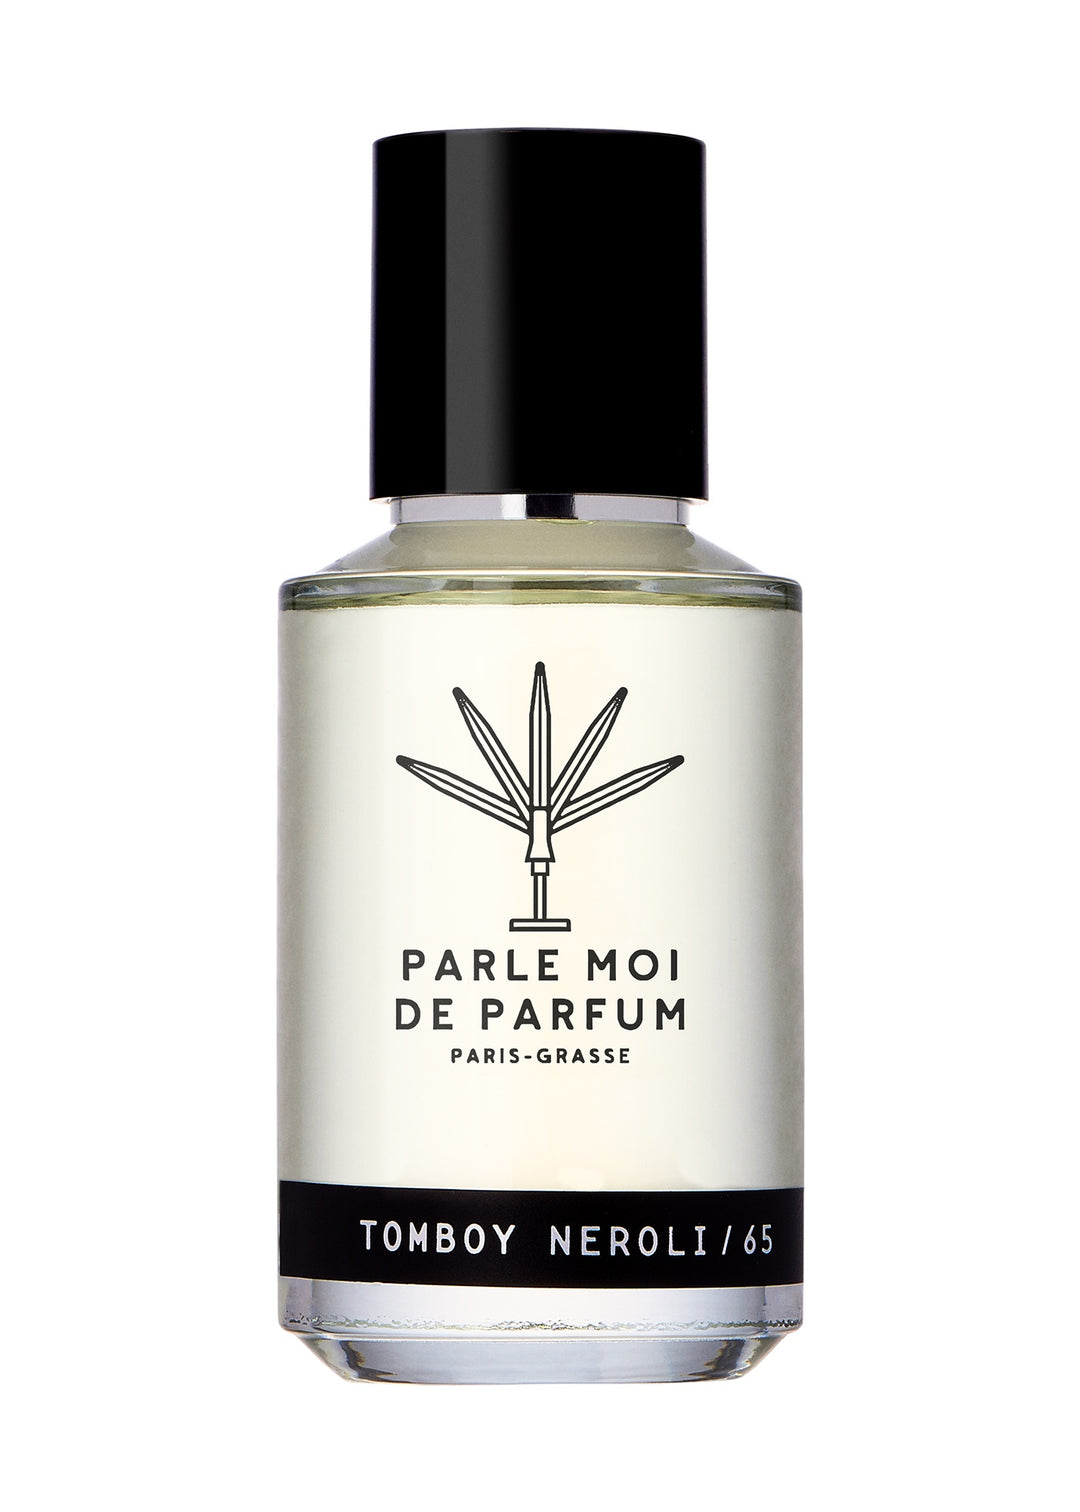 Parle Moi de Parfum - Tomboy Neroli  / 65 EDP 50ml | Buster McGee Daylesford